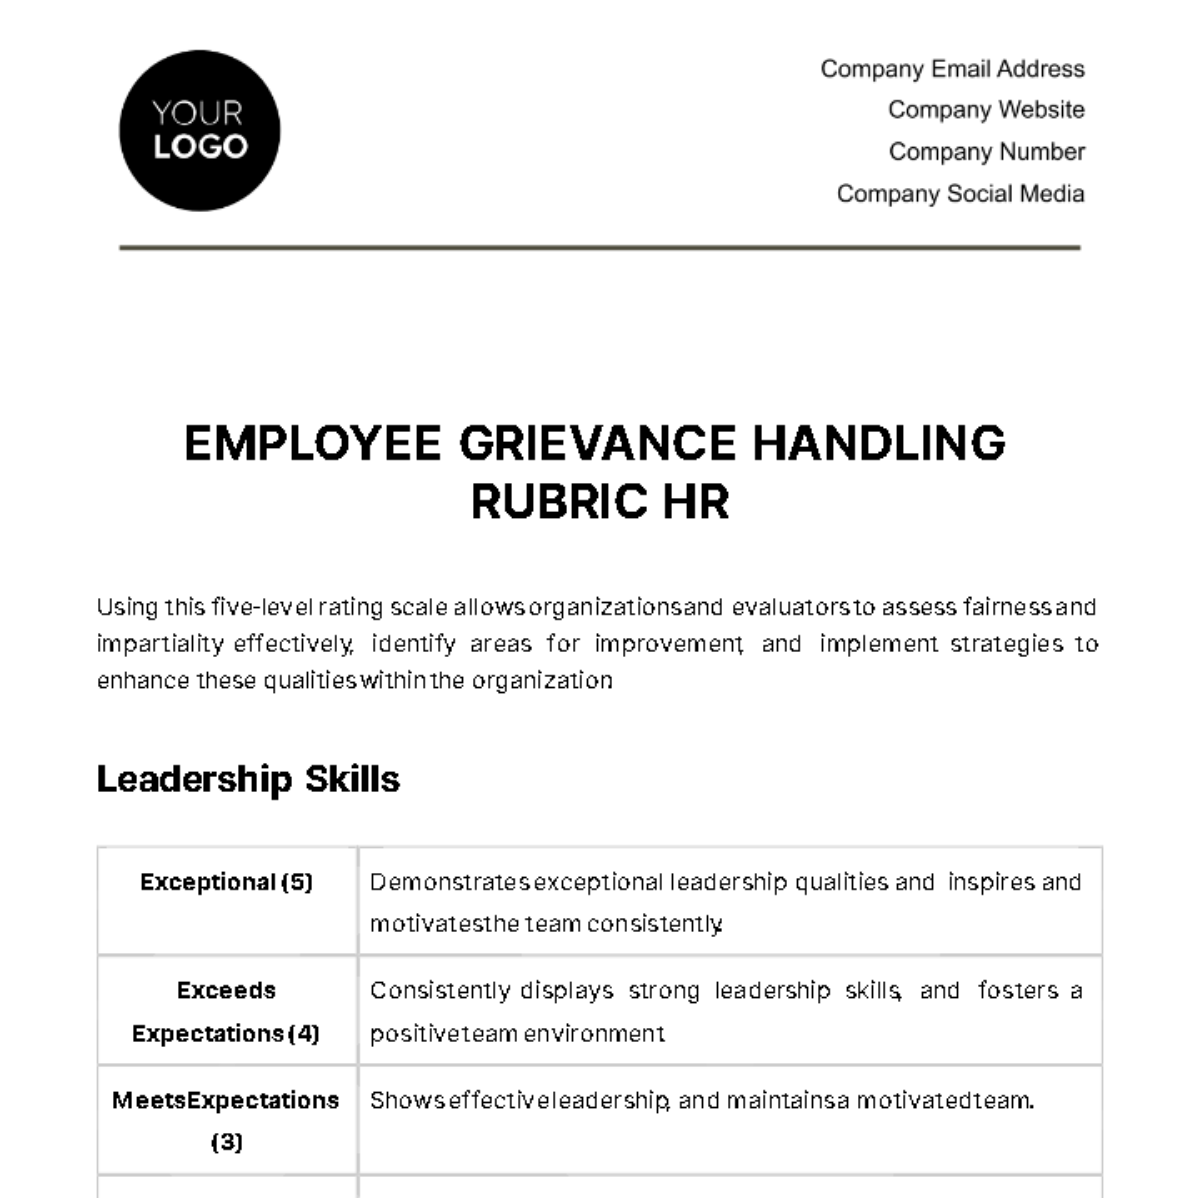 Employee Grievance Handling Rubric HR Template